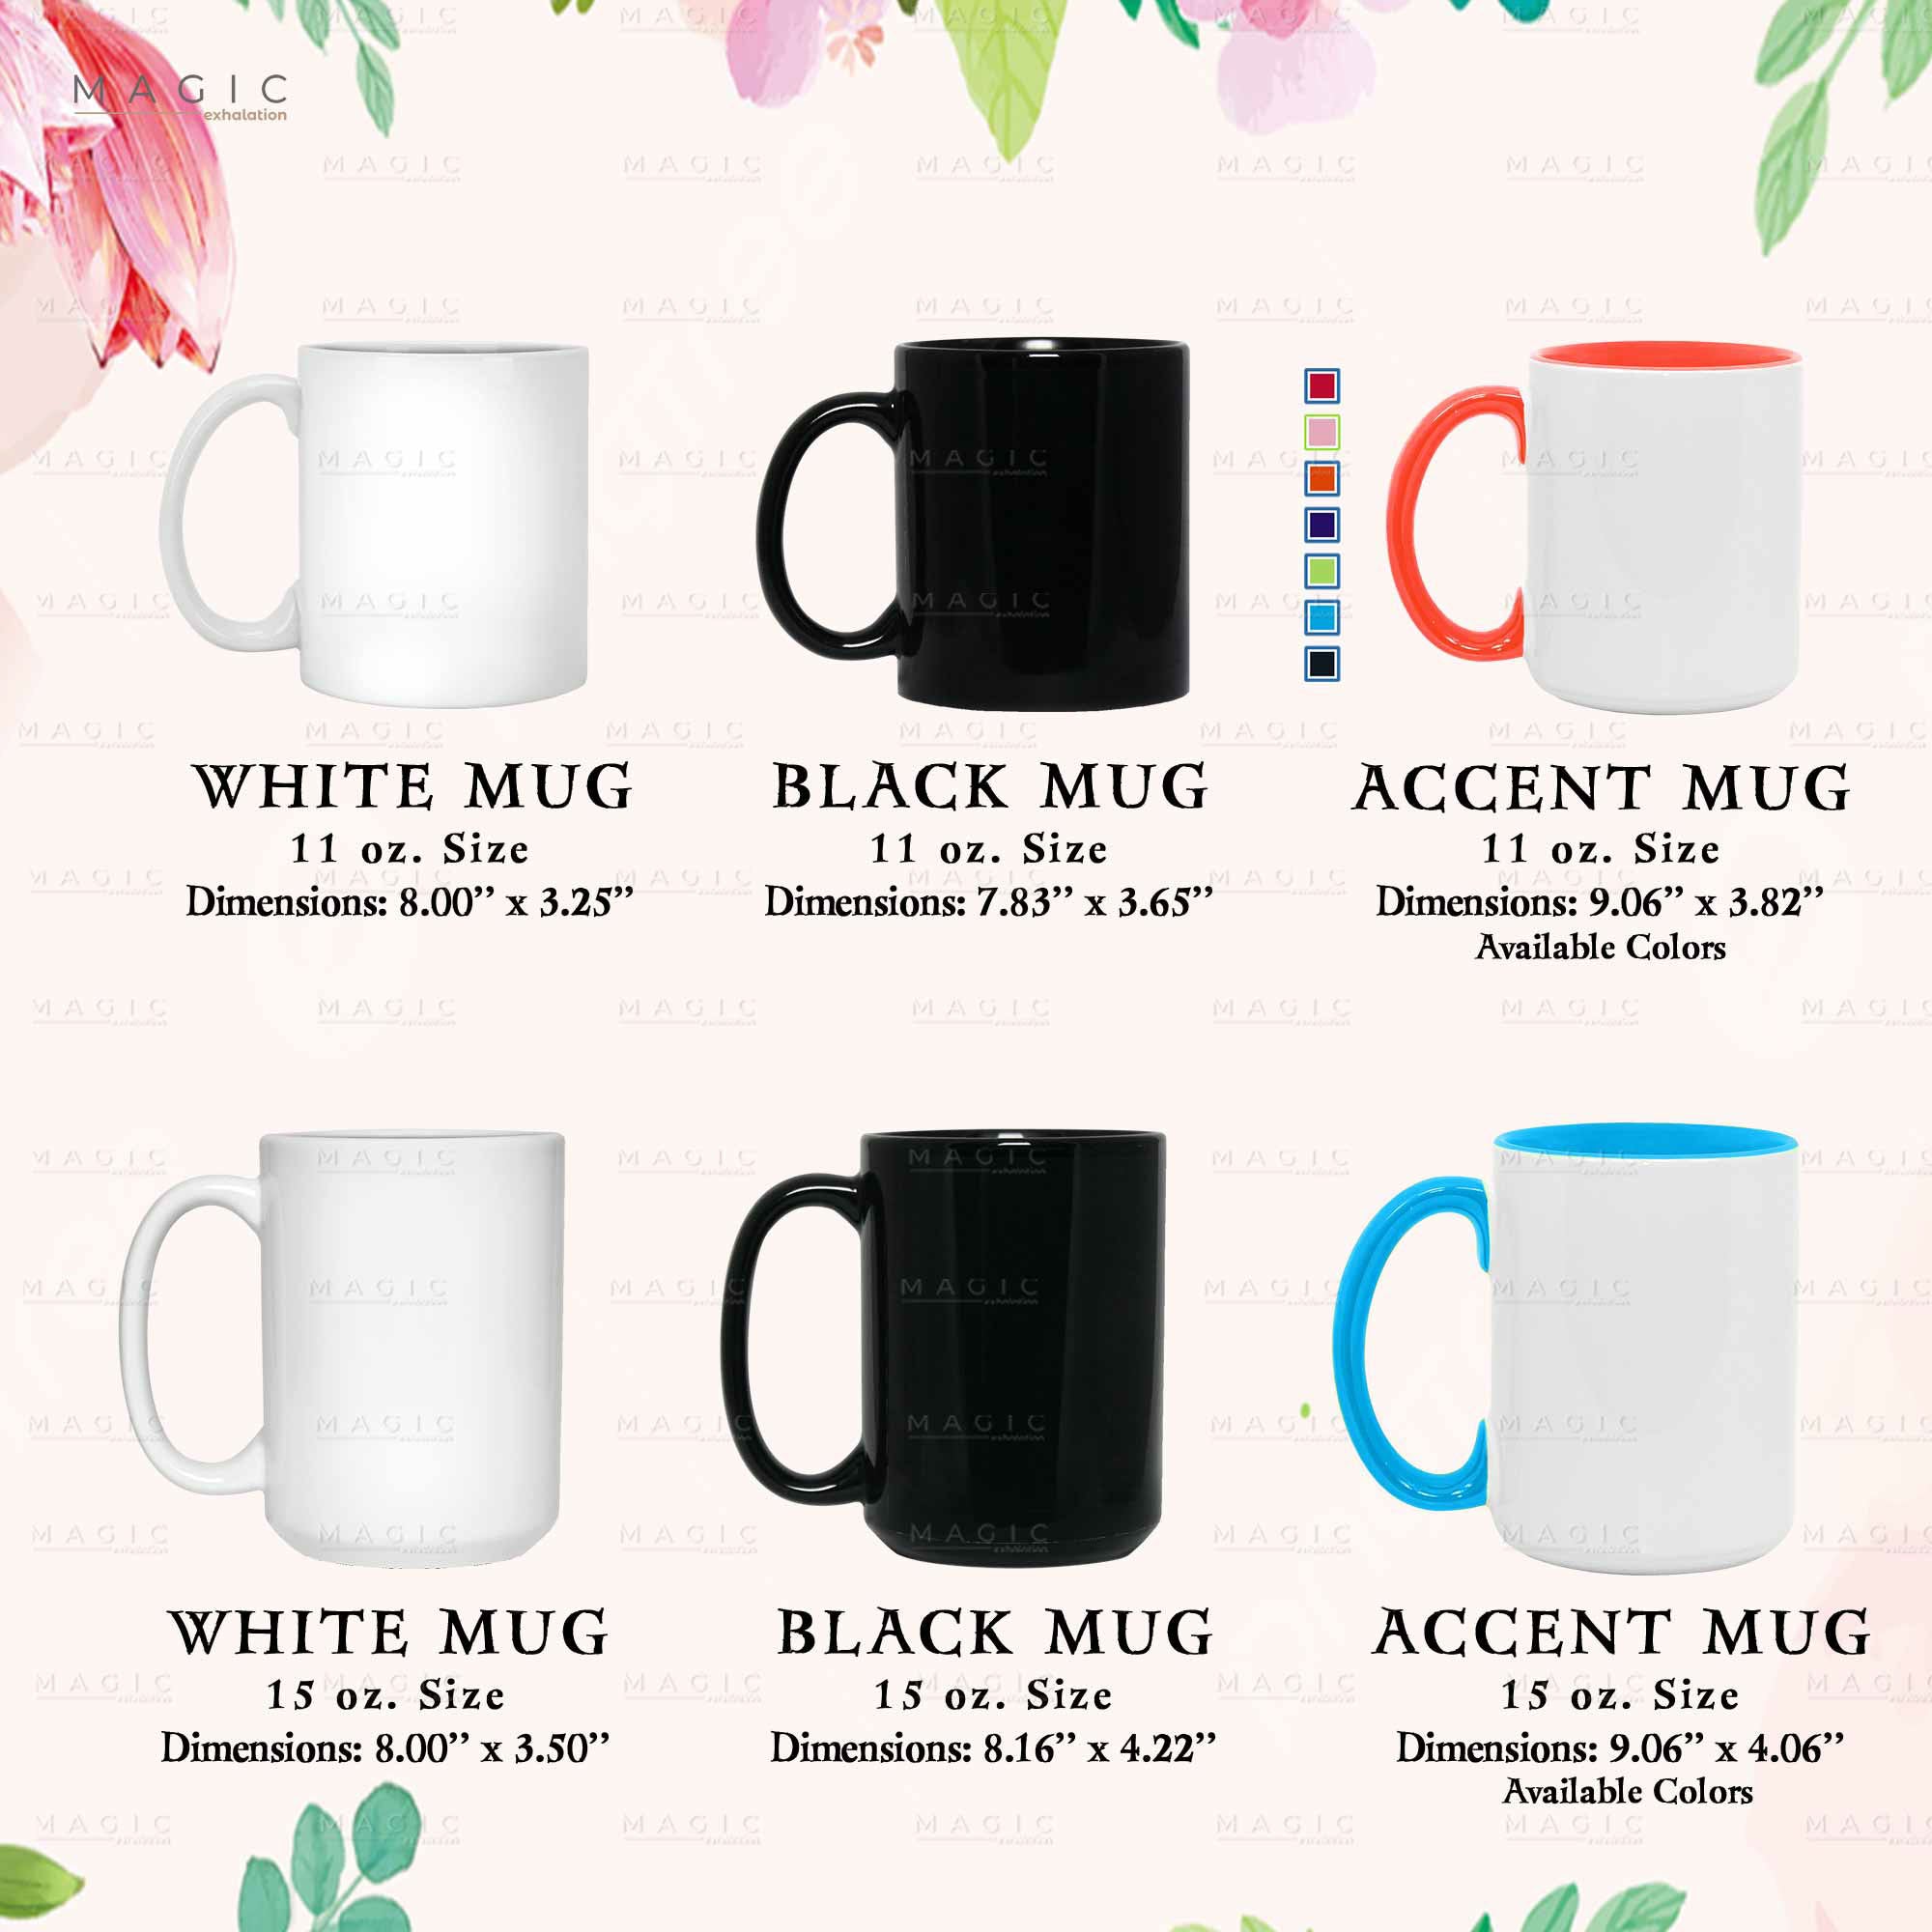 Customized Mugs With Photos